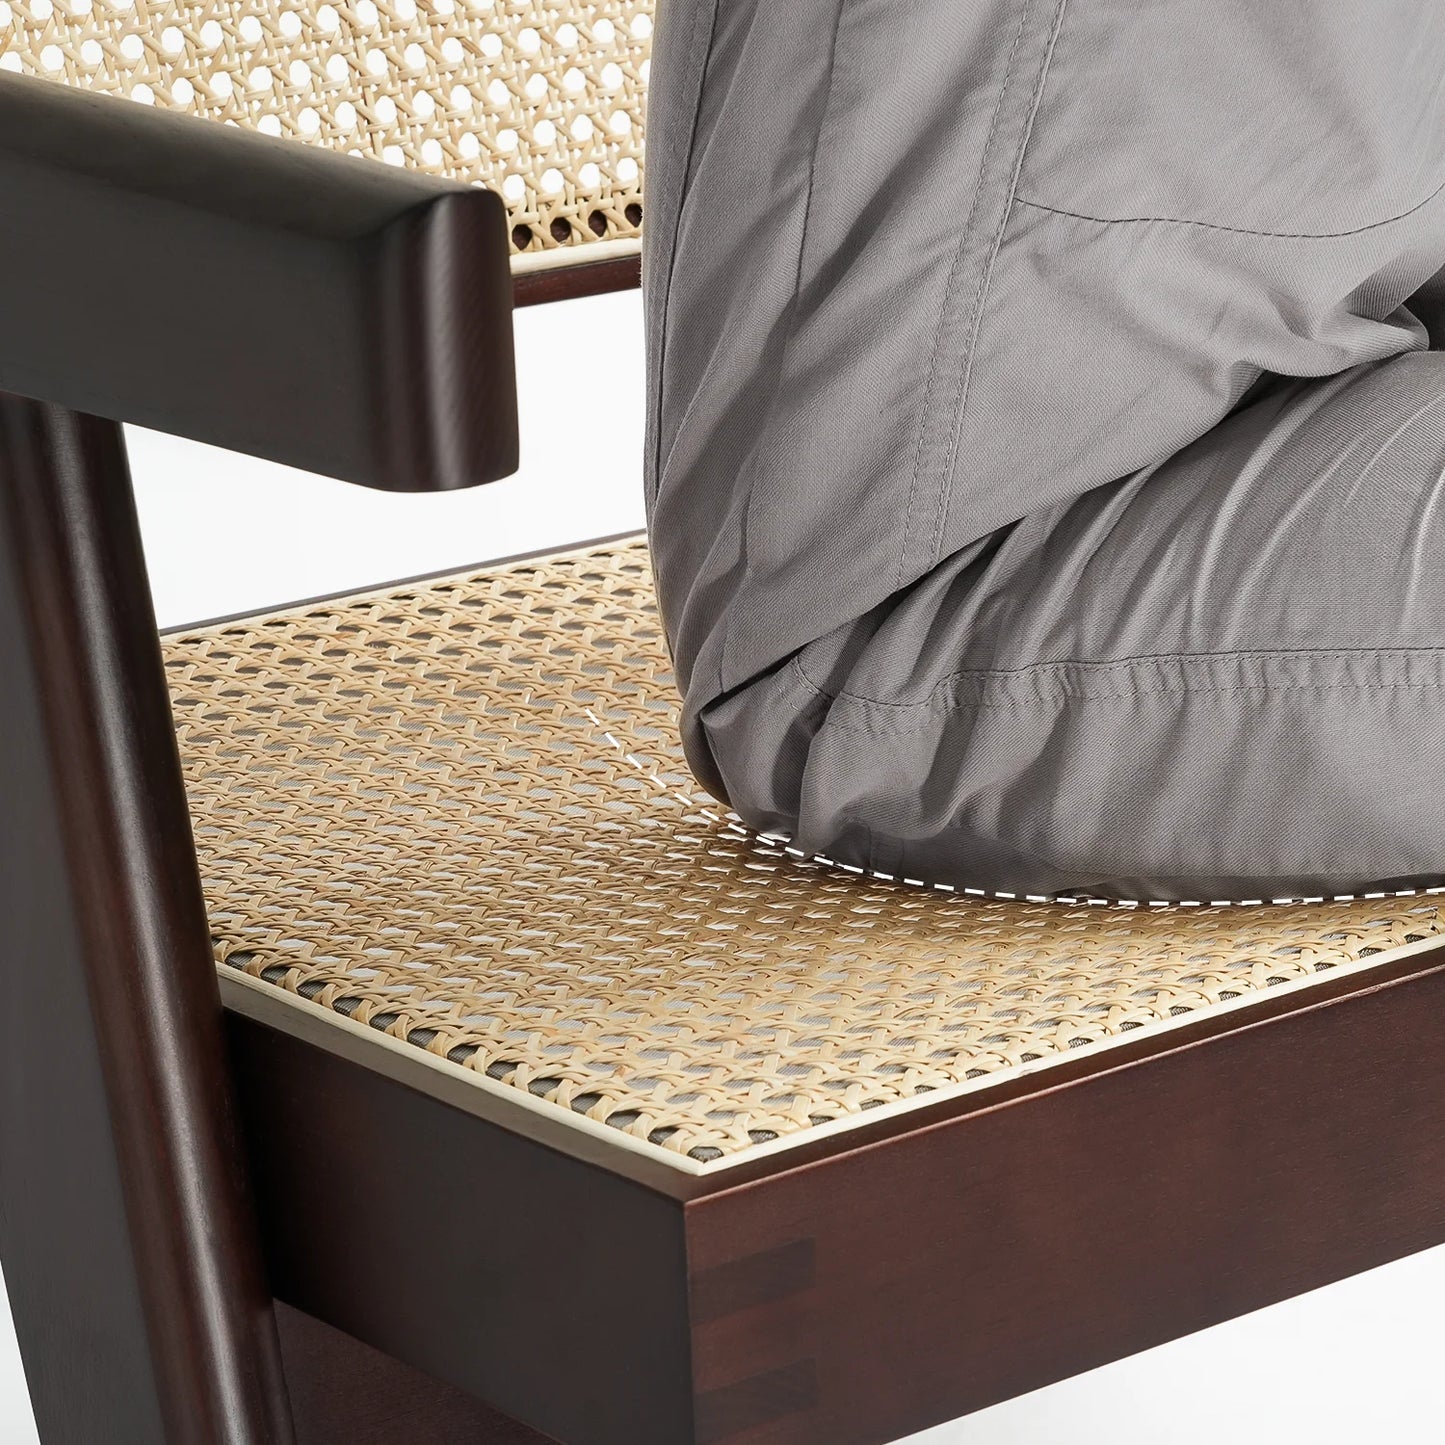 Arthia Designs - Chandigarh Solid Wood Rattan Leisure Chair - Review